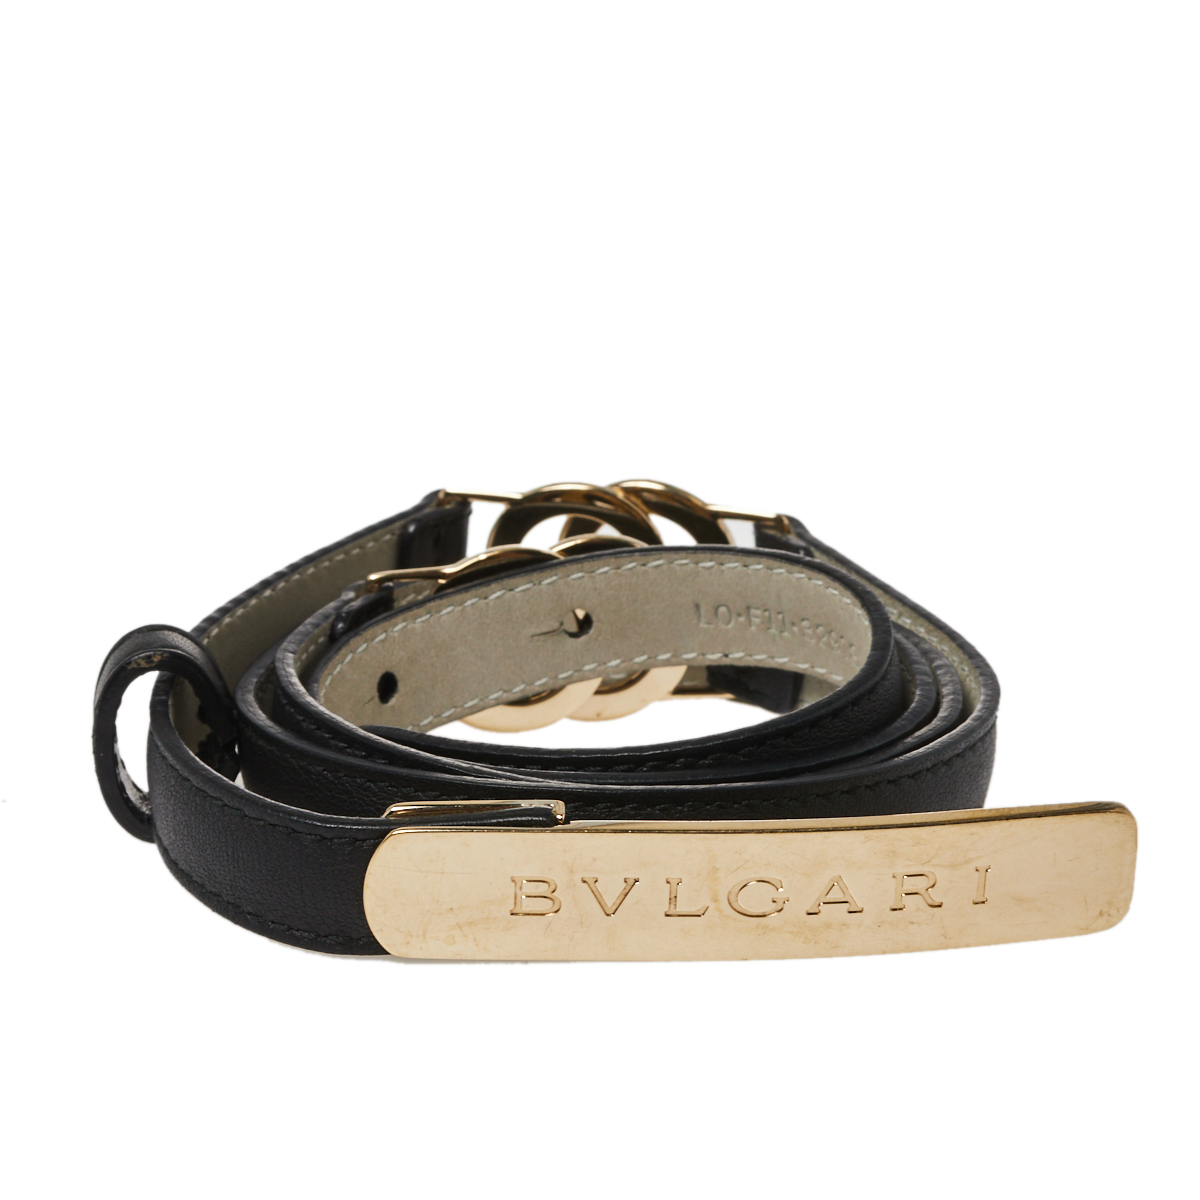 

Bvlgari Black Leather Double Ring Buckle Slim Belt